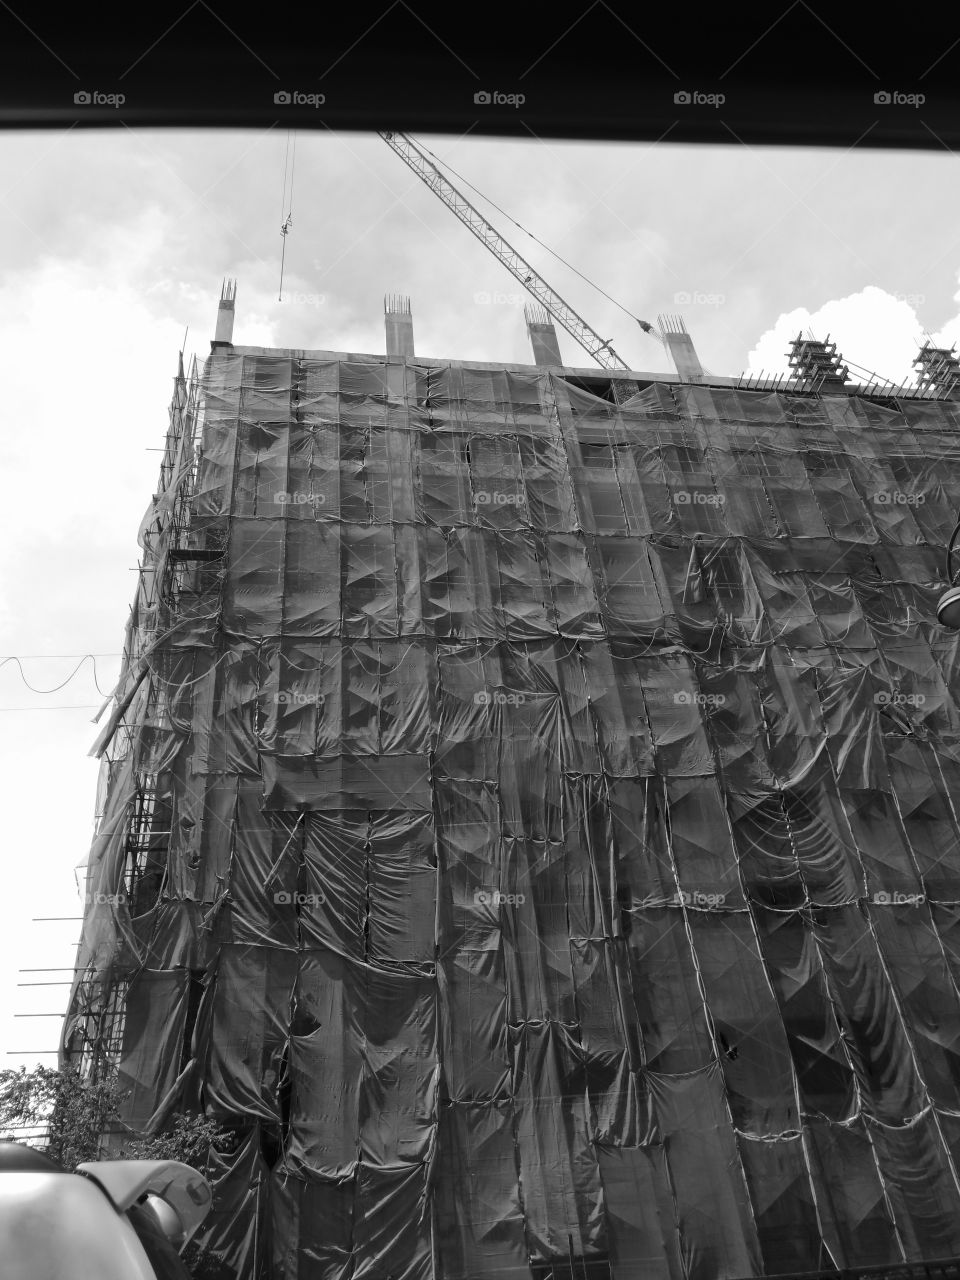 Building under construction in mono